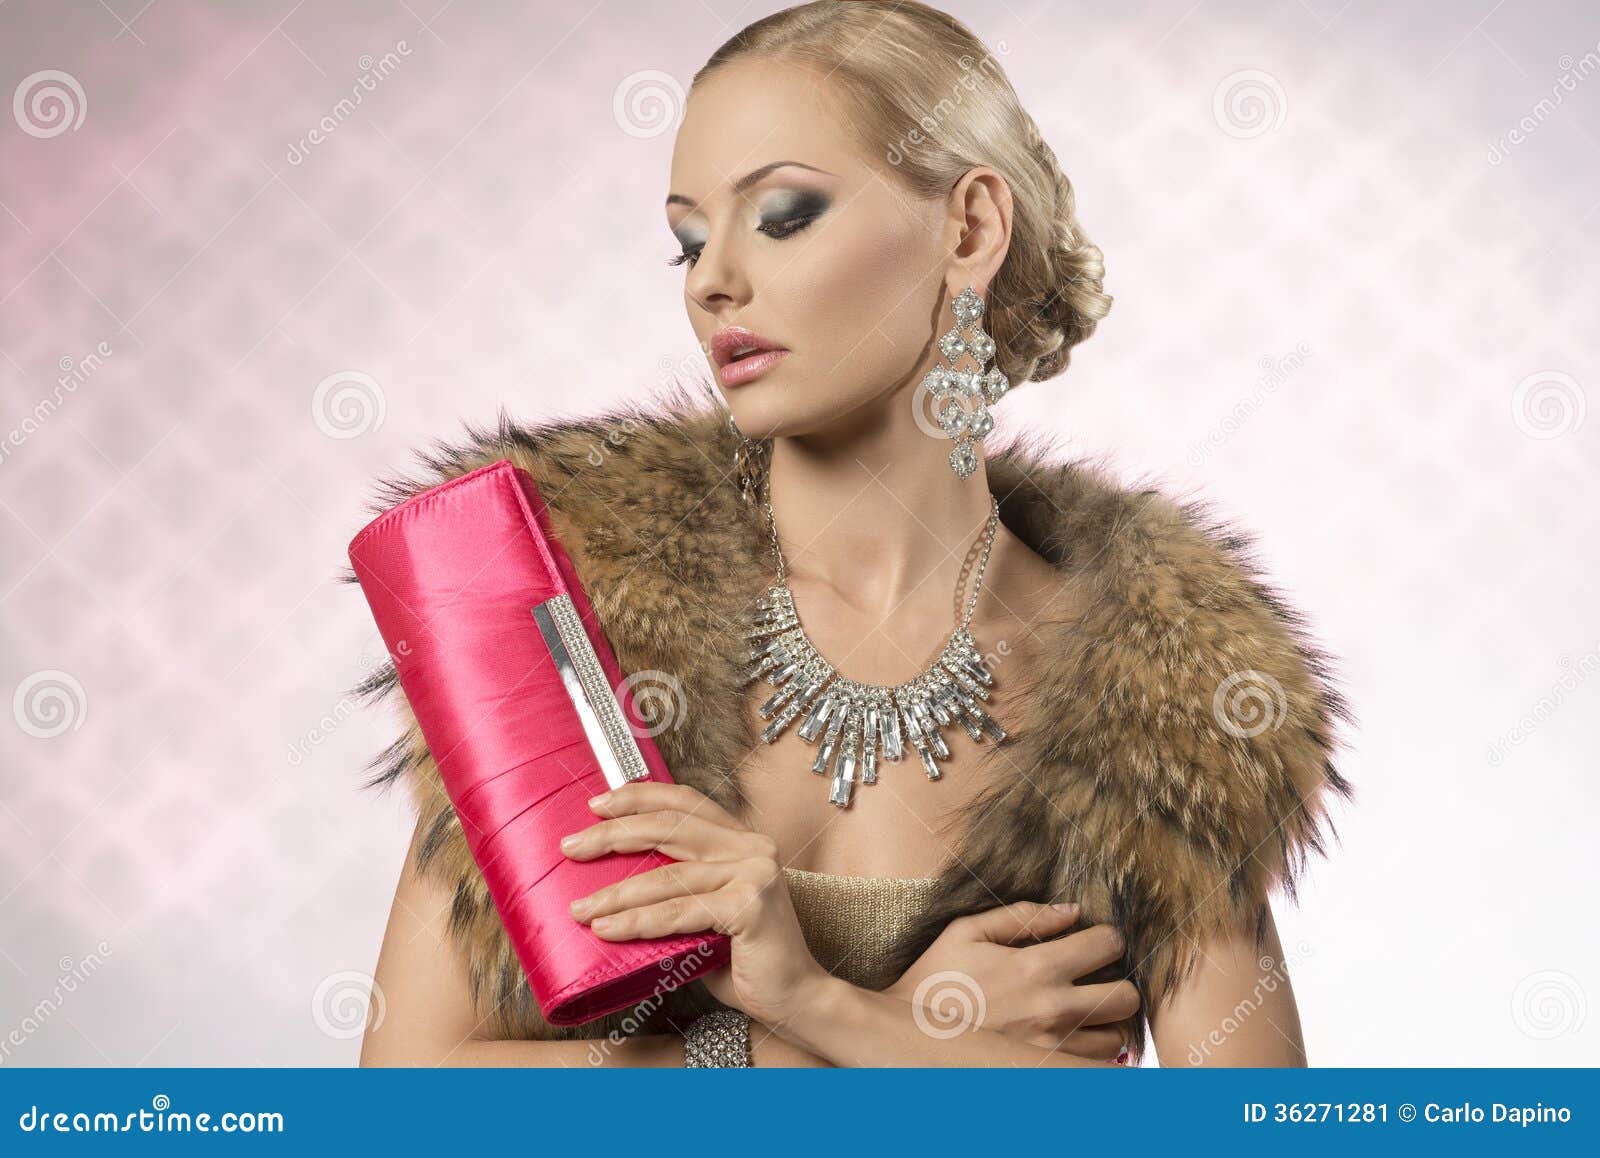 Aristocratic Fashion Woman Stock Image - Image: 36271281